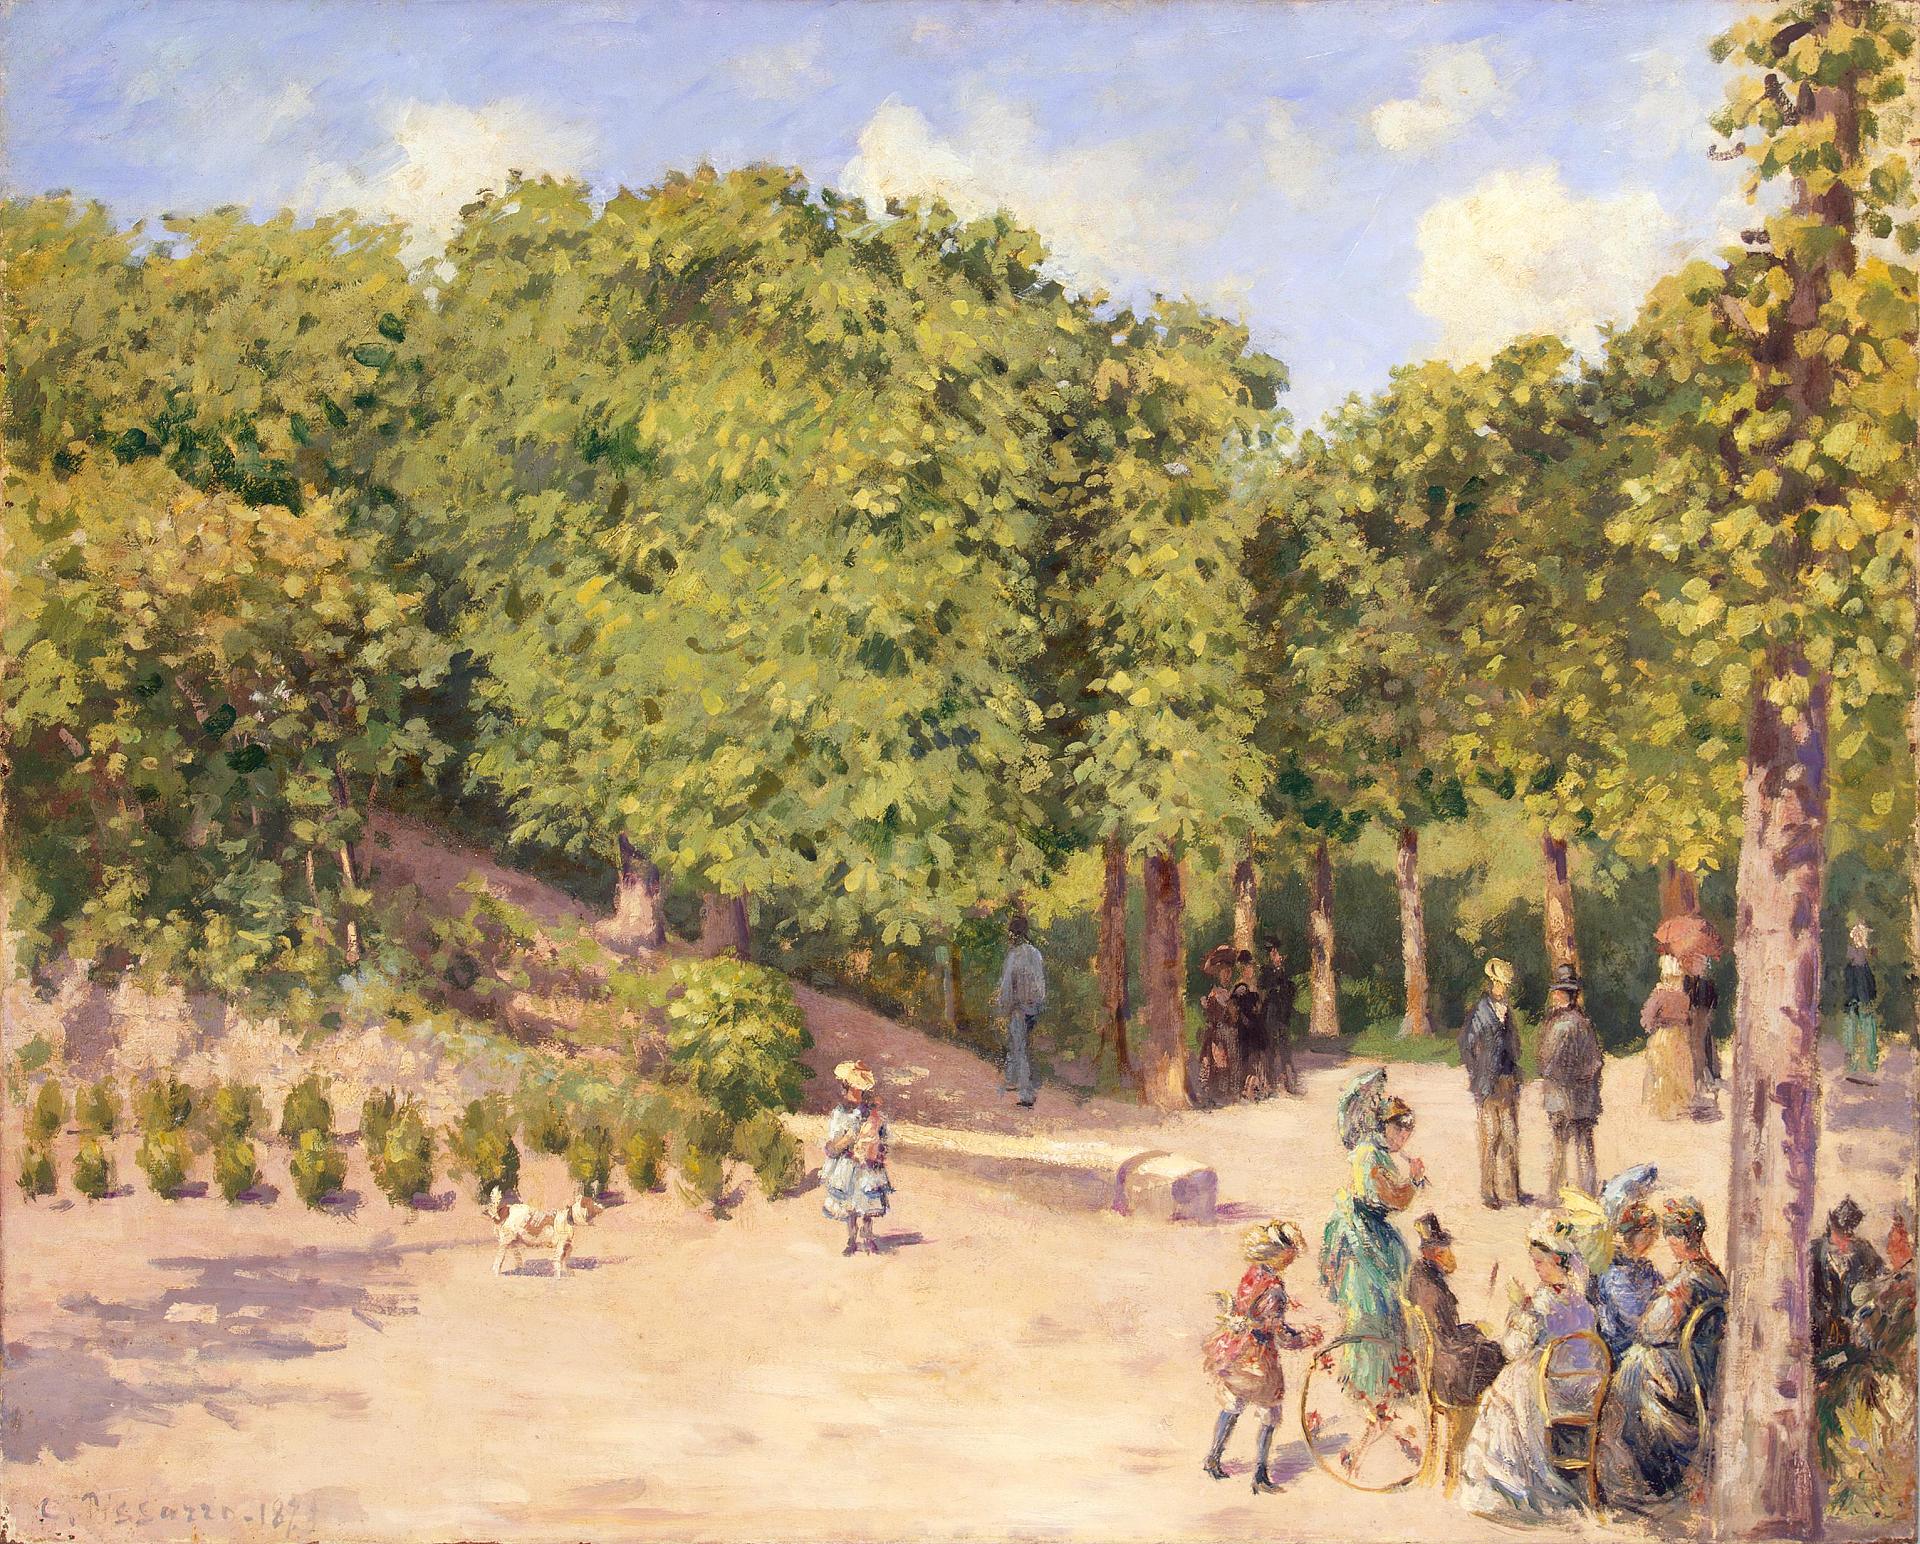 Камиль Писсарро. "Городской парк в Понтуазе". 1873. Эрмитаж, Санкт-Петербург.